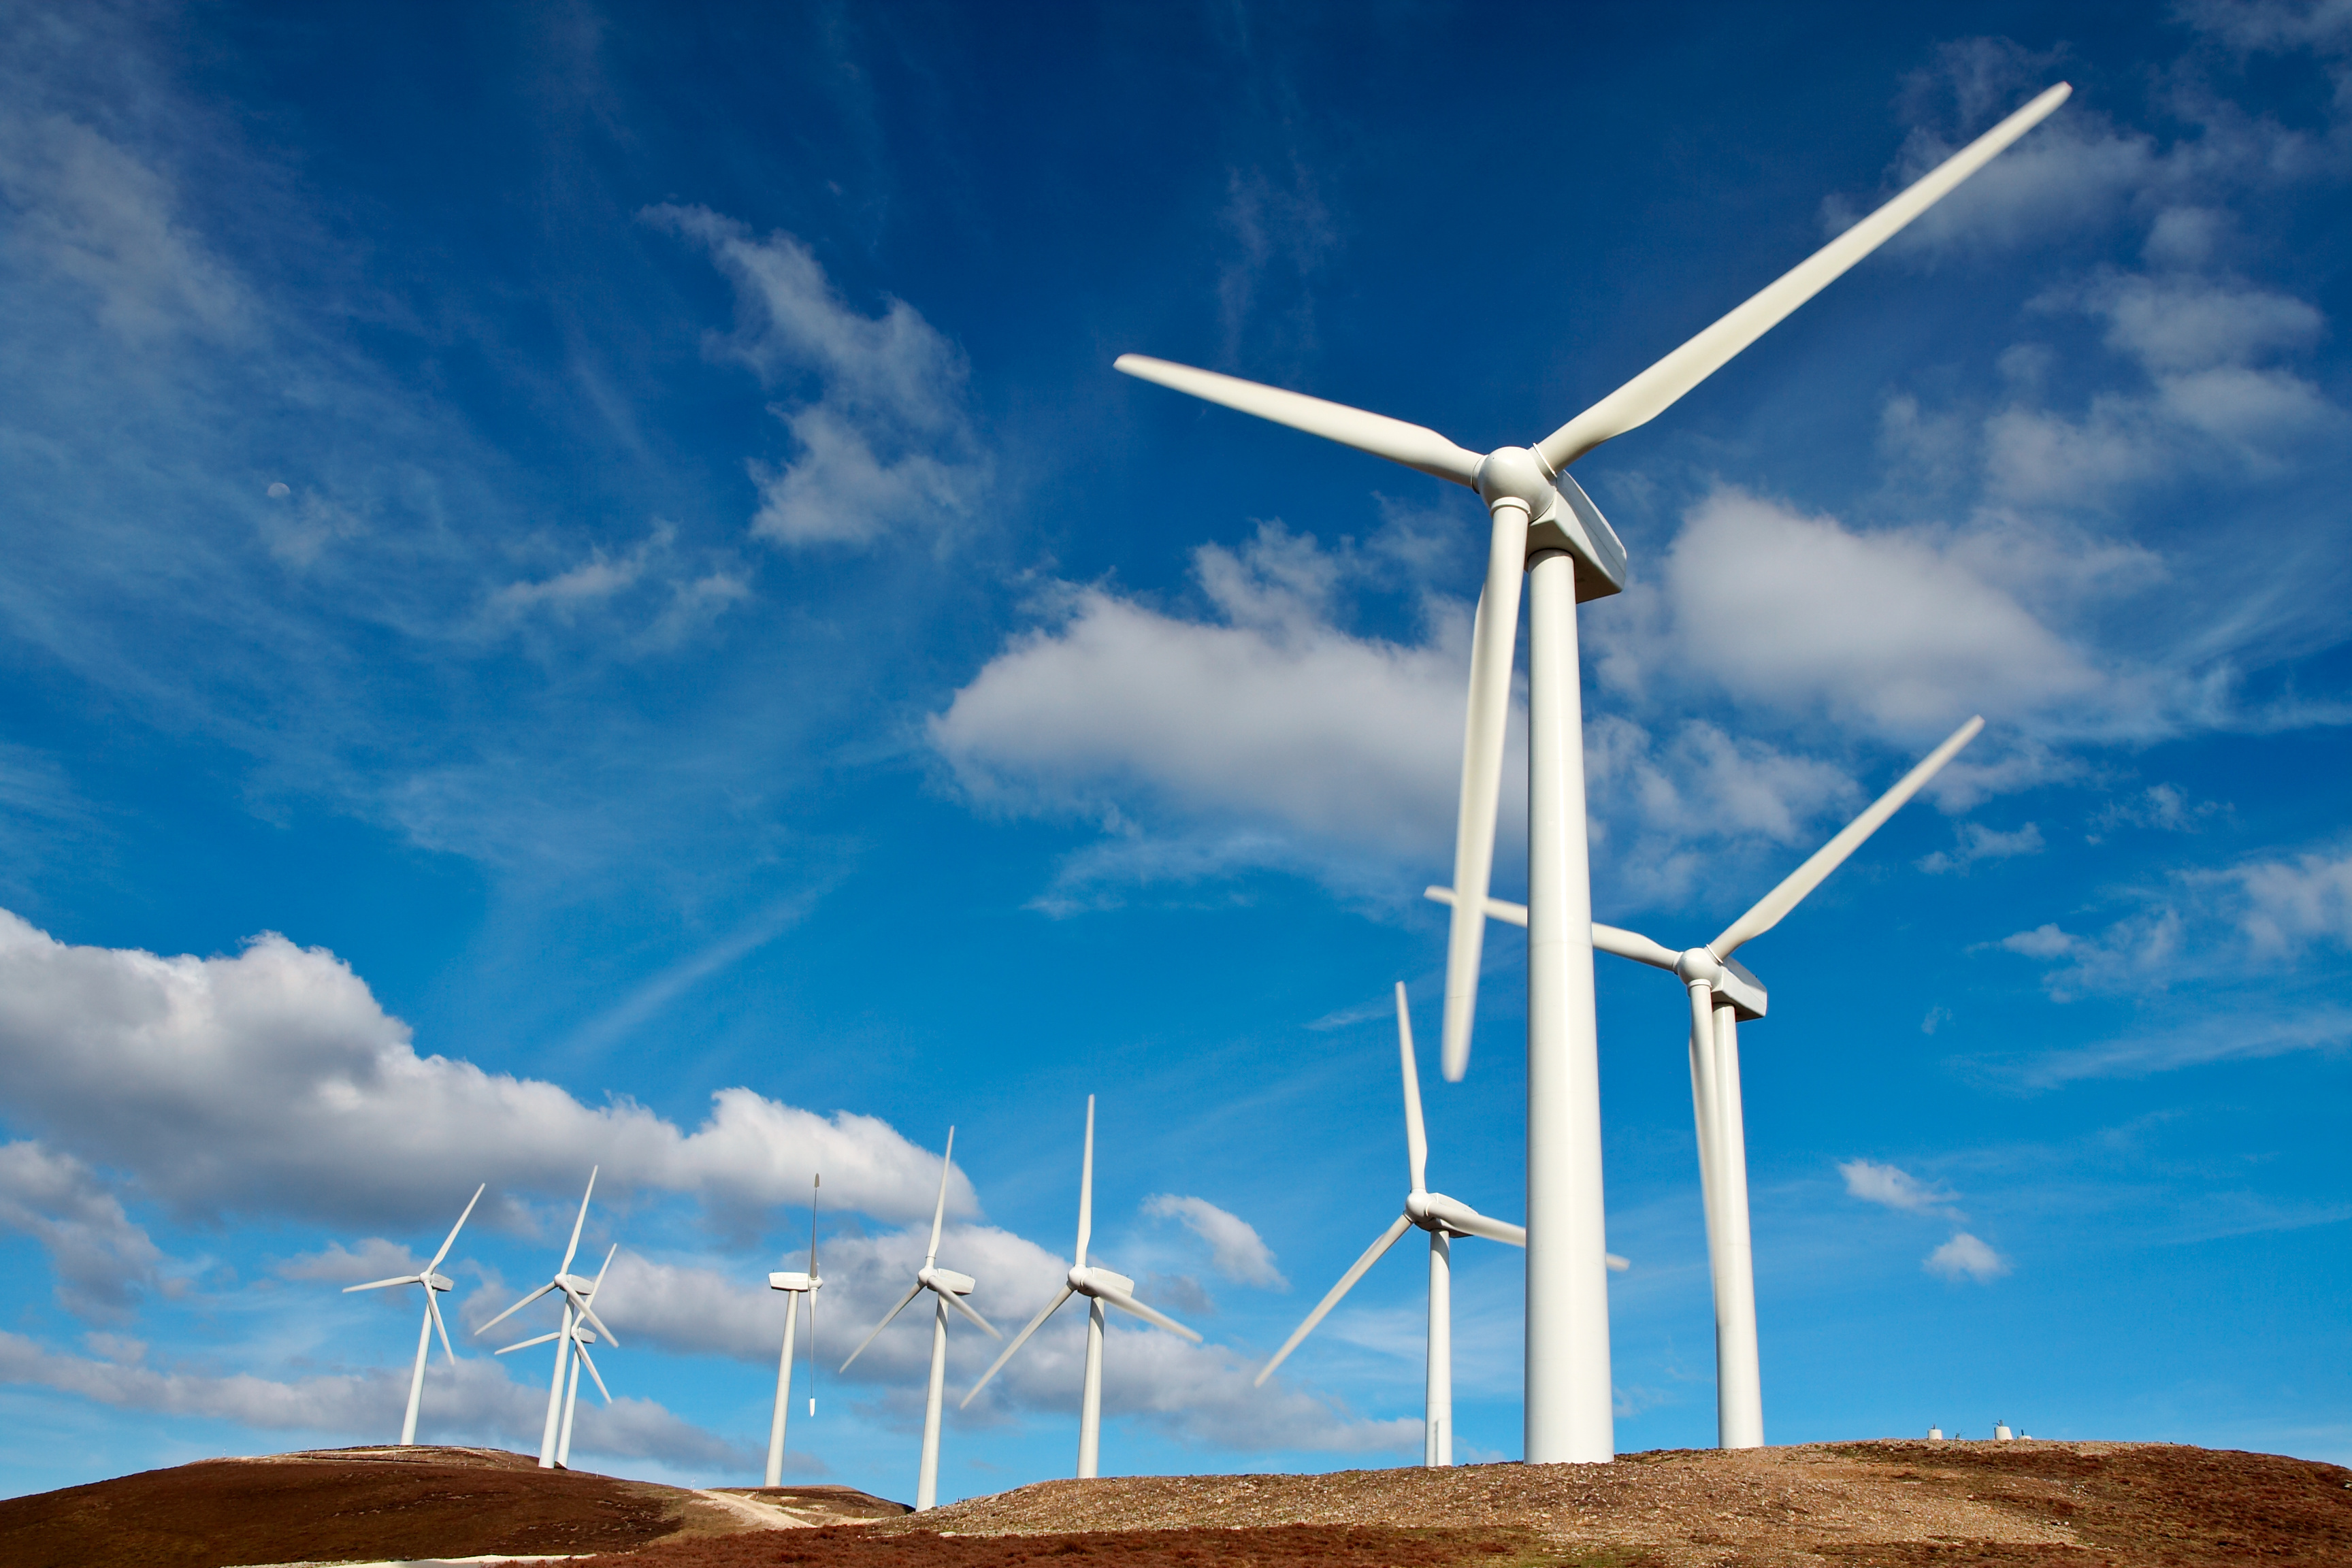 Wind turbines provide power.